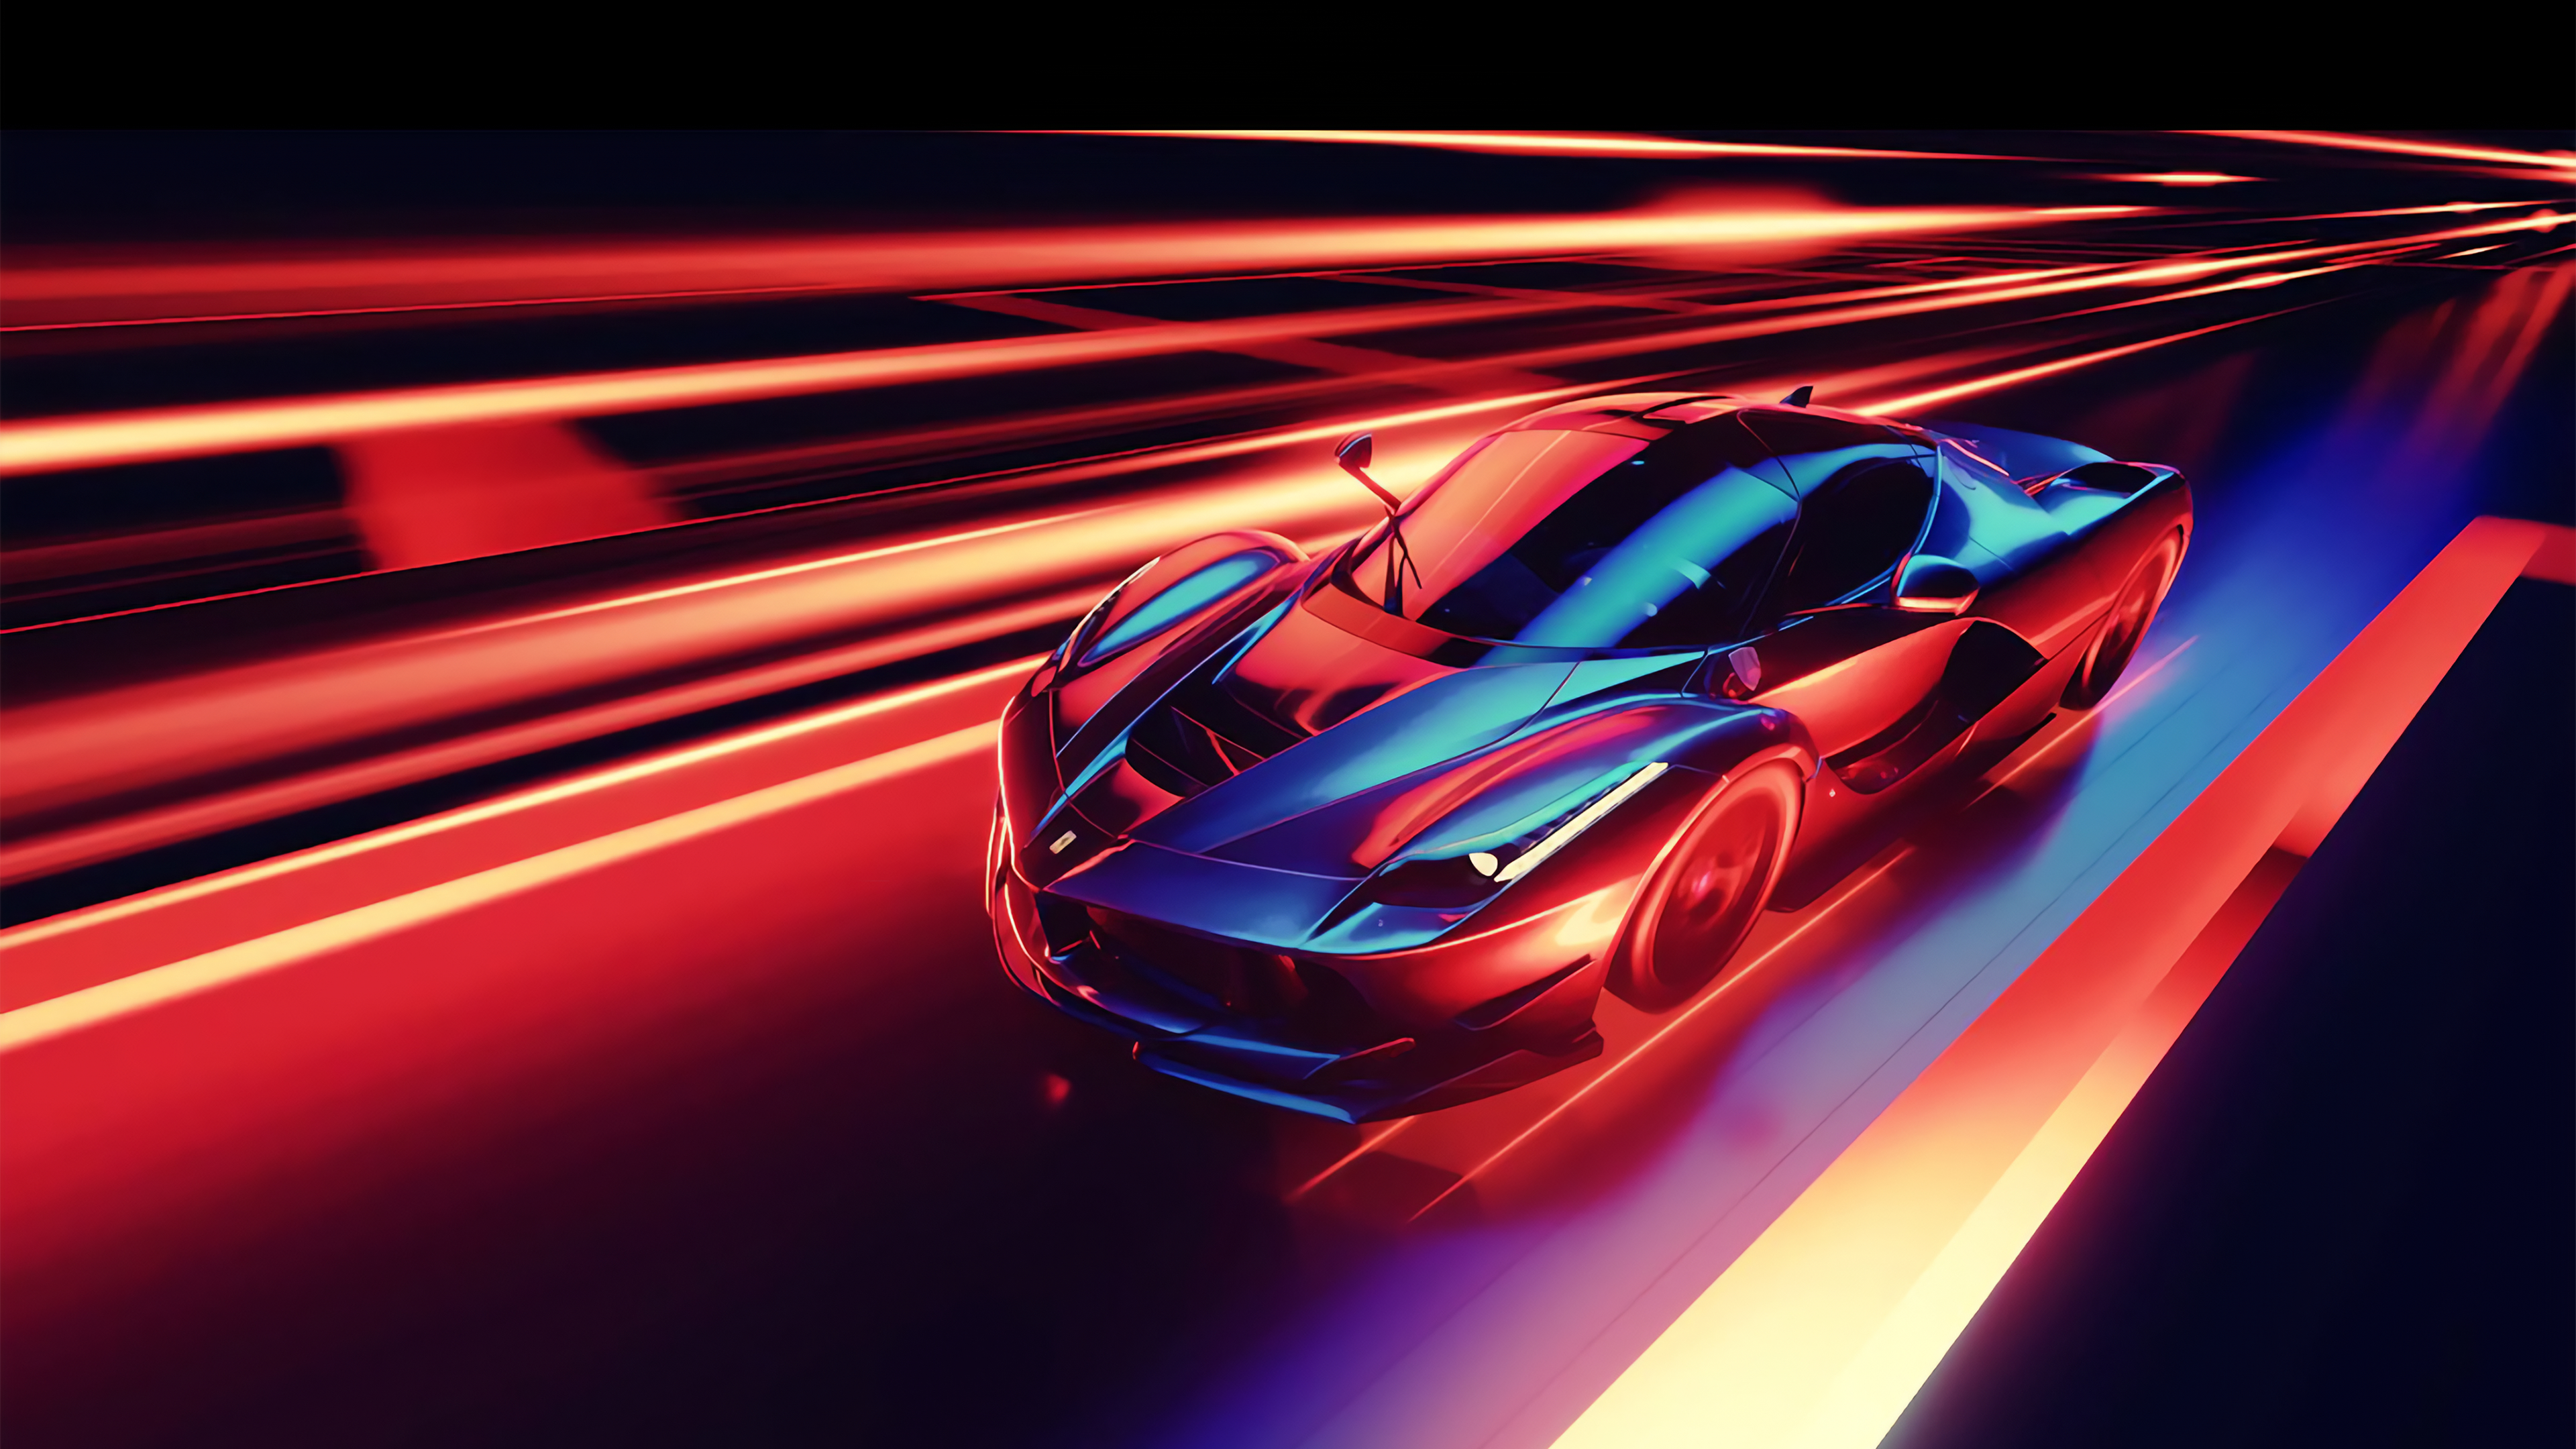 Ferrari Neon Wallpaper, HD Artist 4K Wallpapers, Images ...